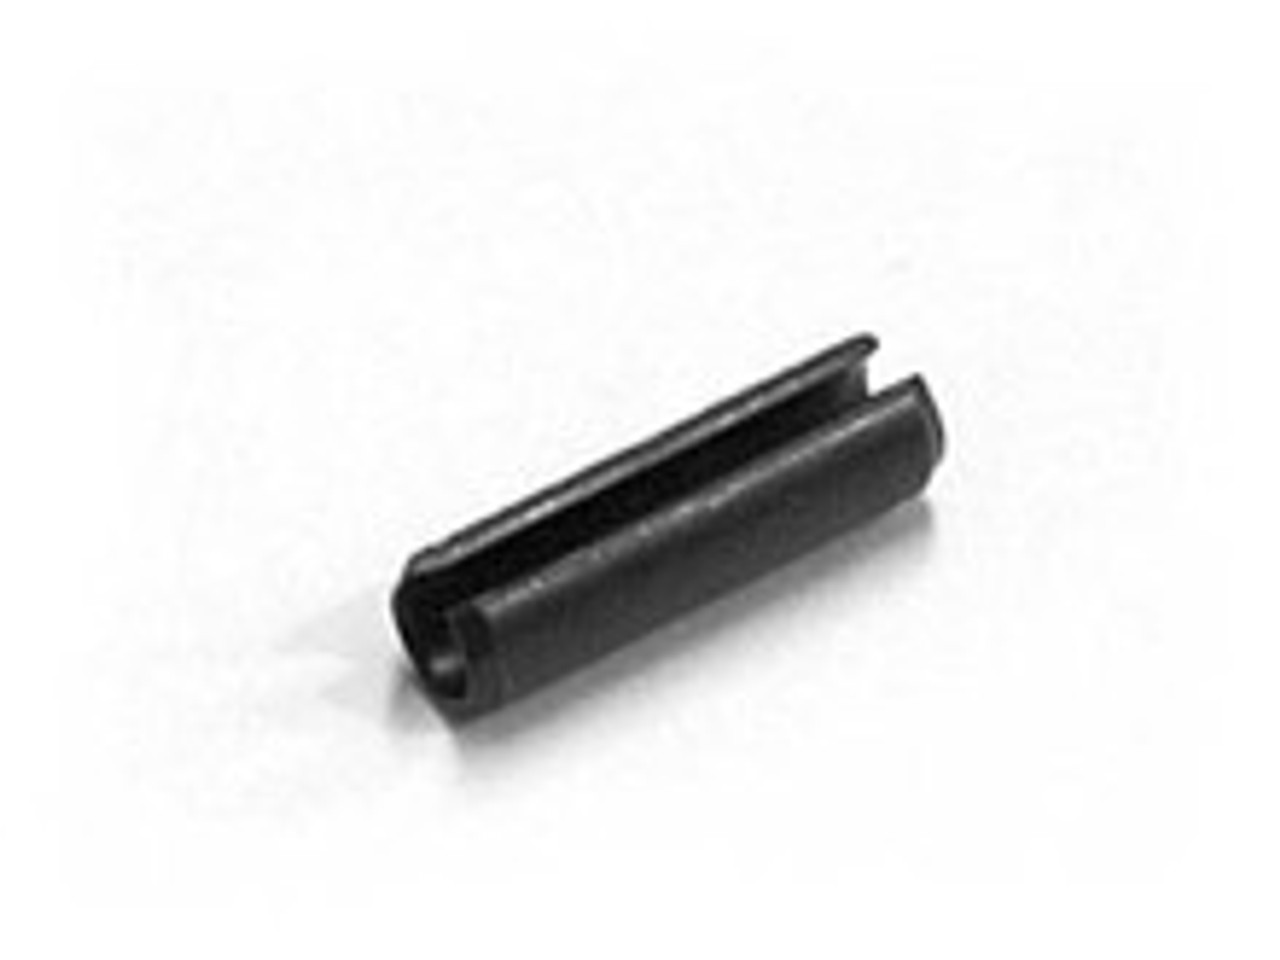 HY0207431 Roll Pin